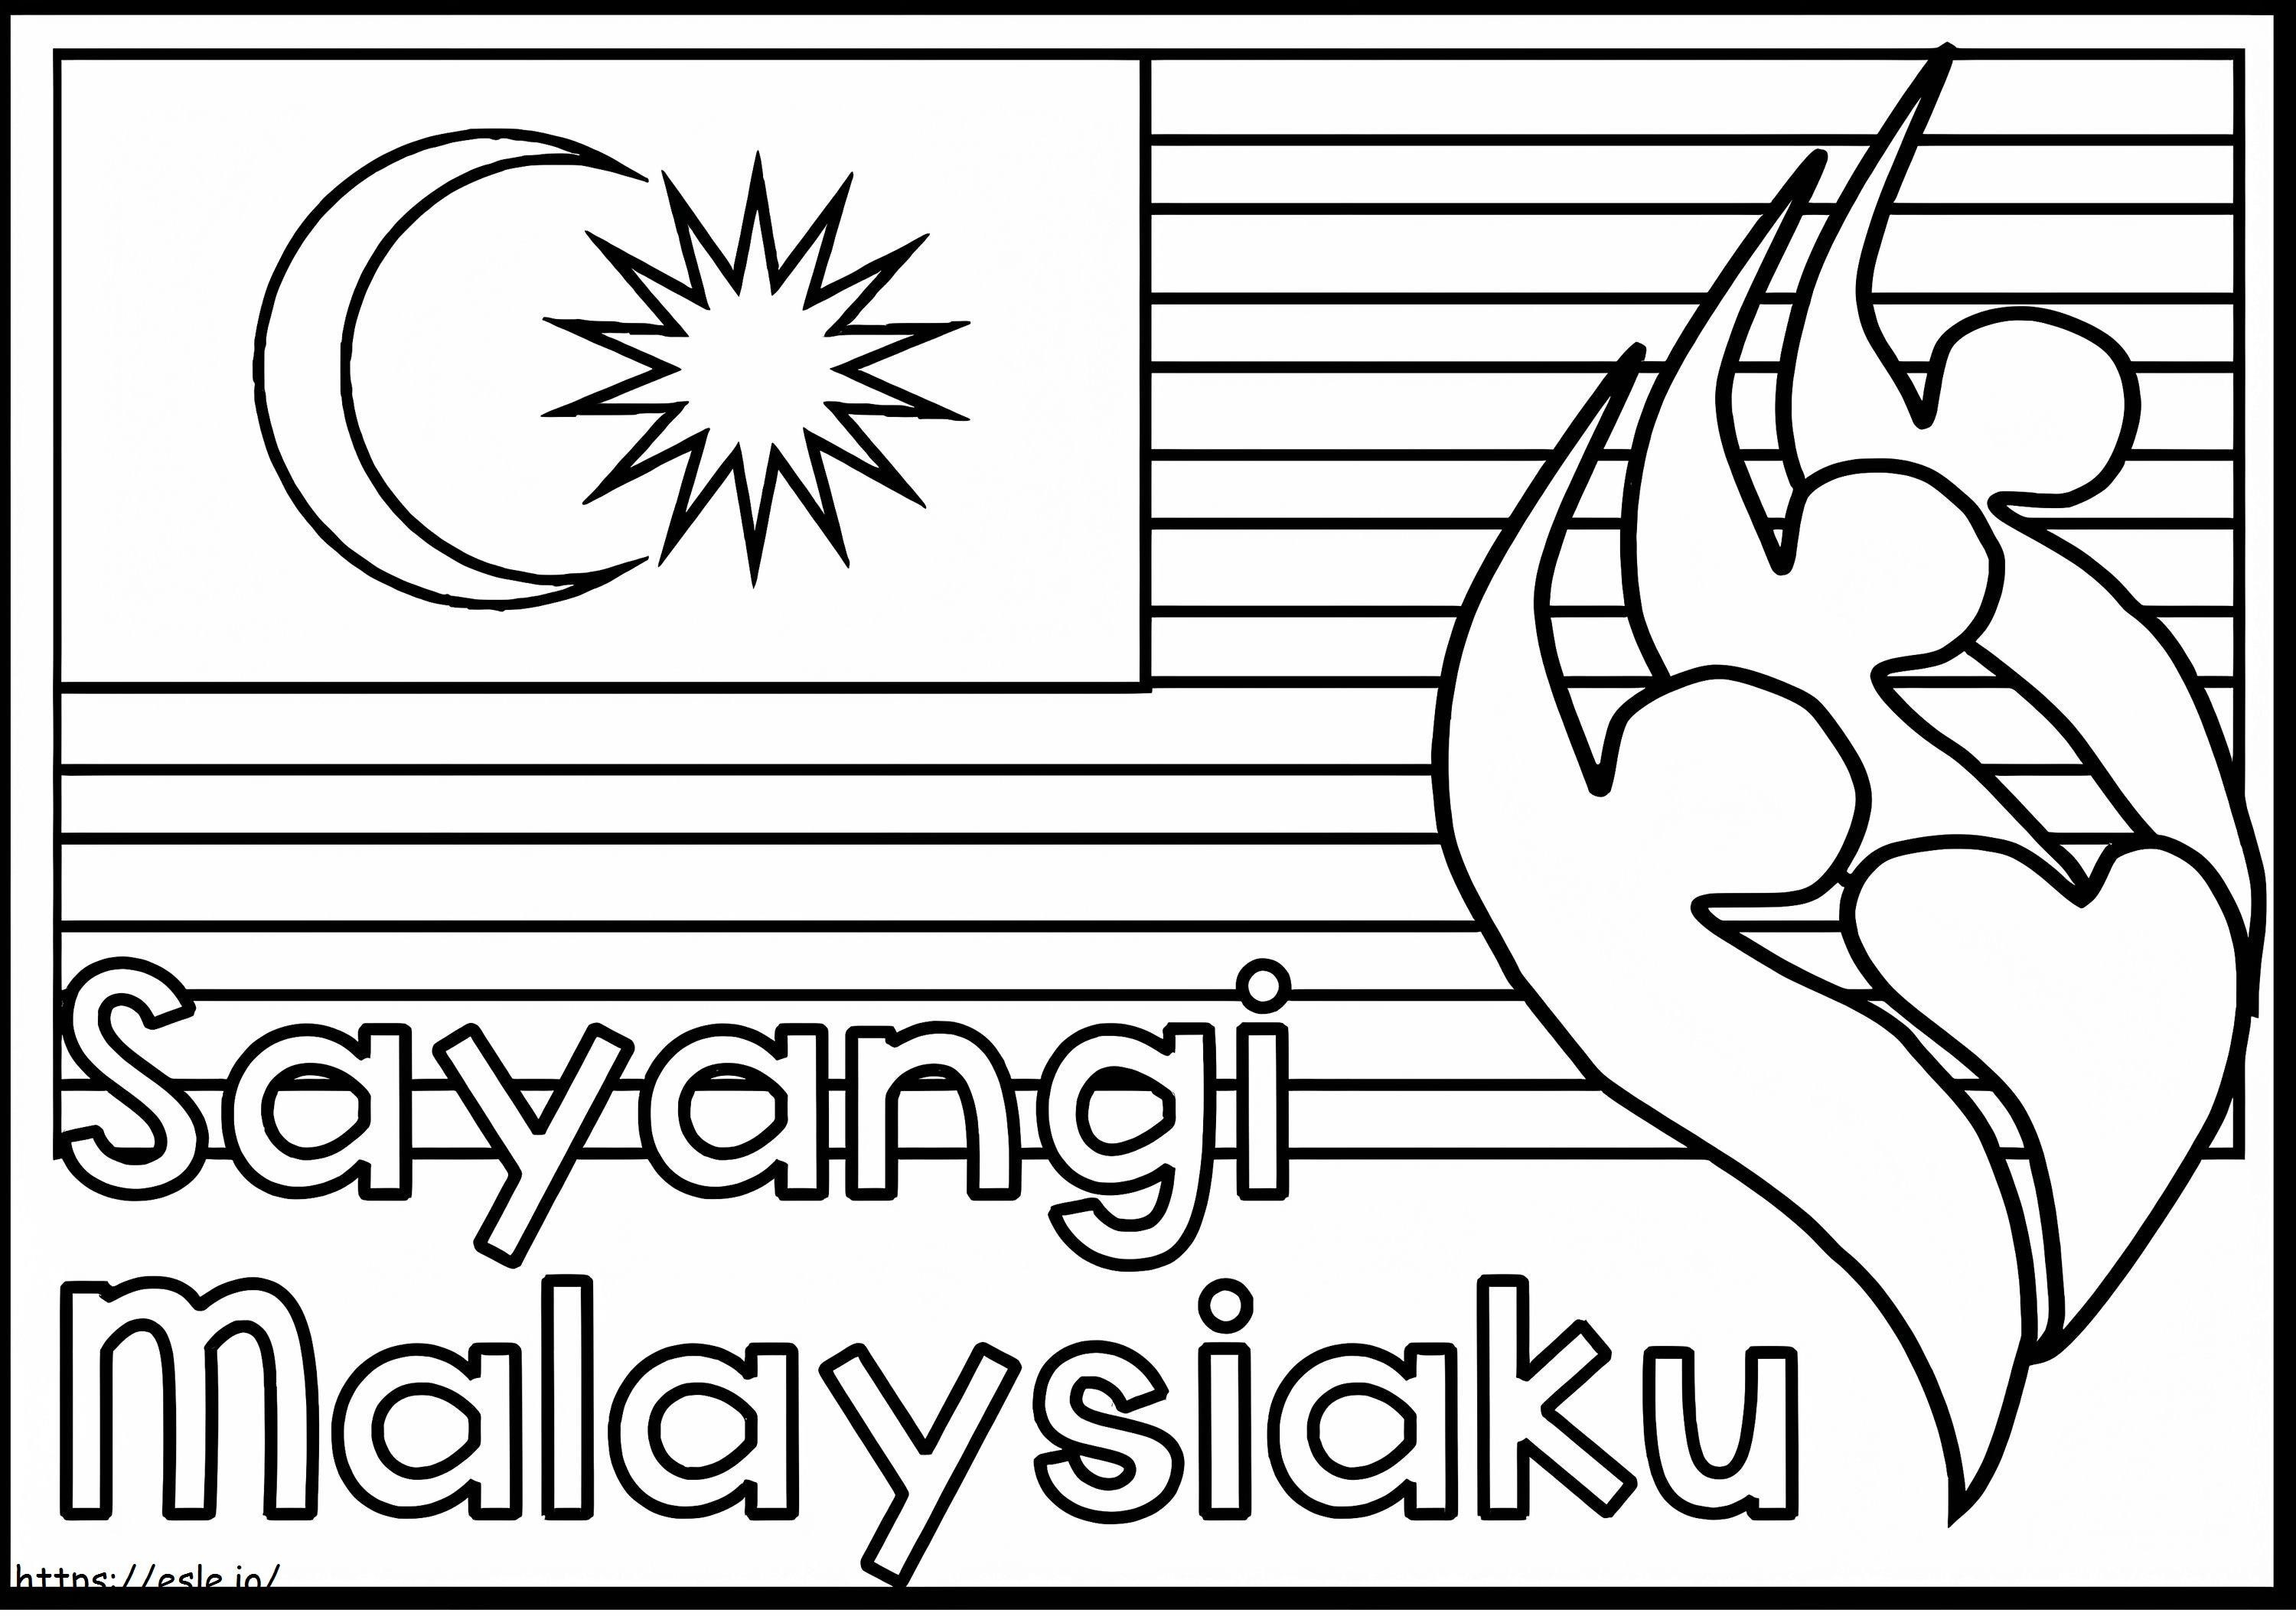 Malezya 1 boyama